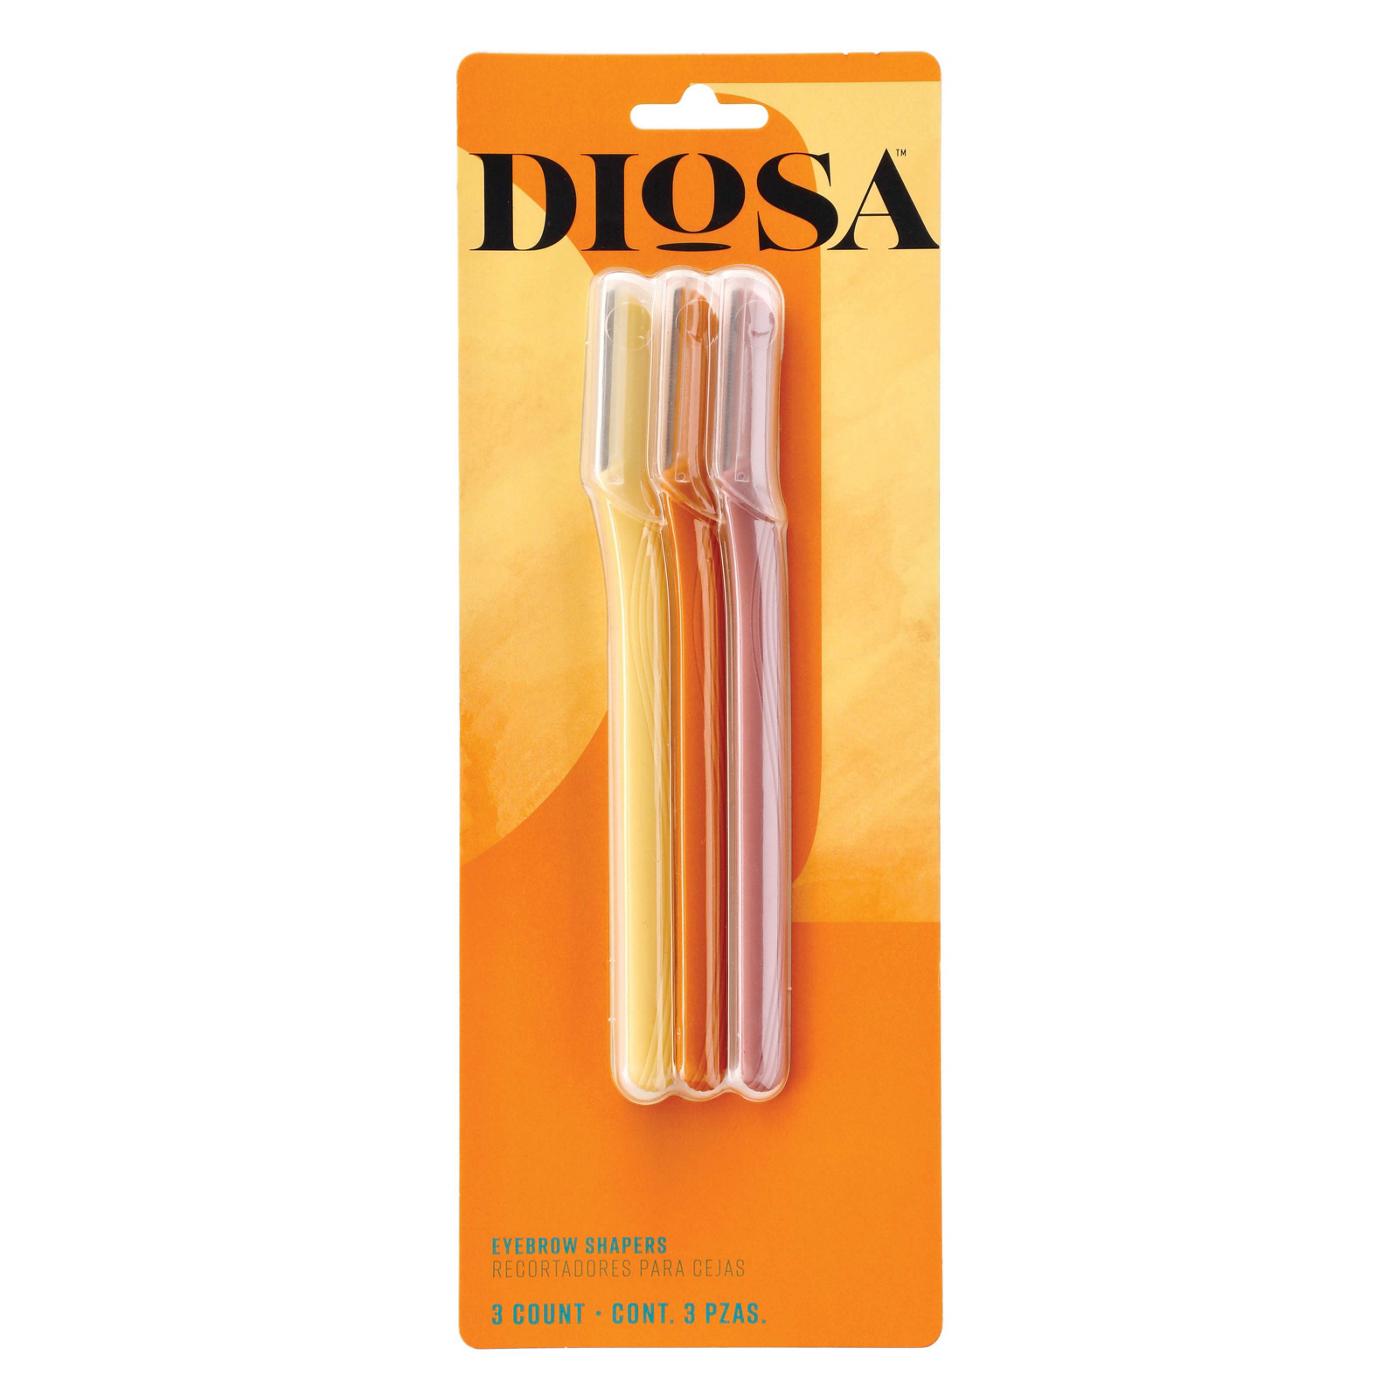 Diosa Eyebrow Shaper Kit; image 1 of 5